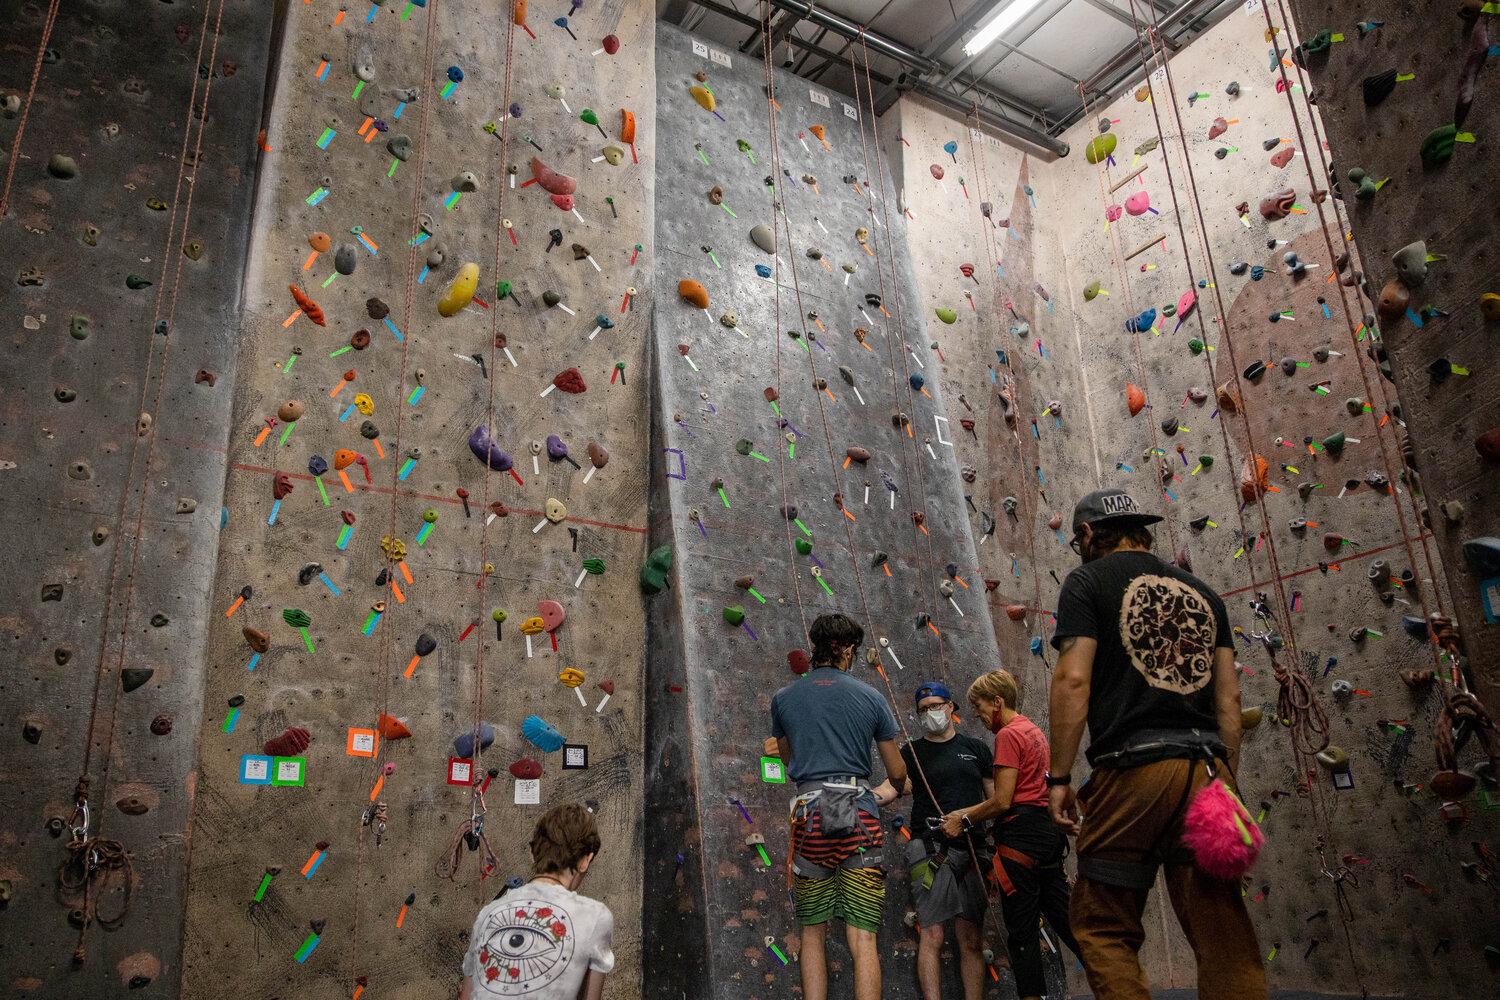 Las vegas indoor rock climbing